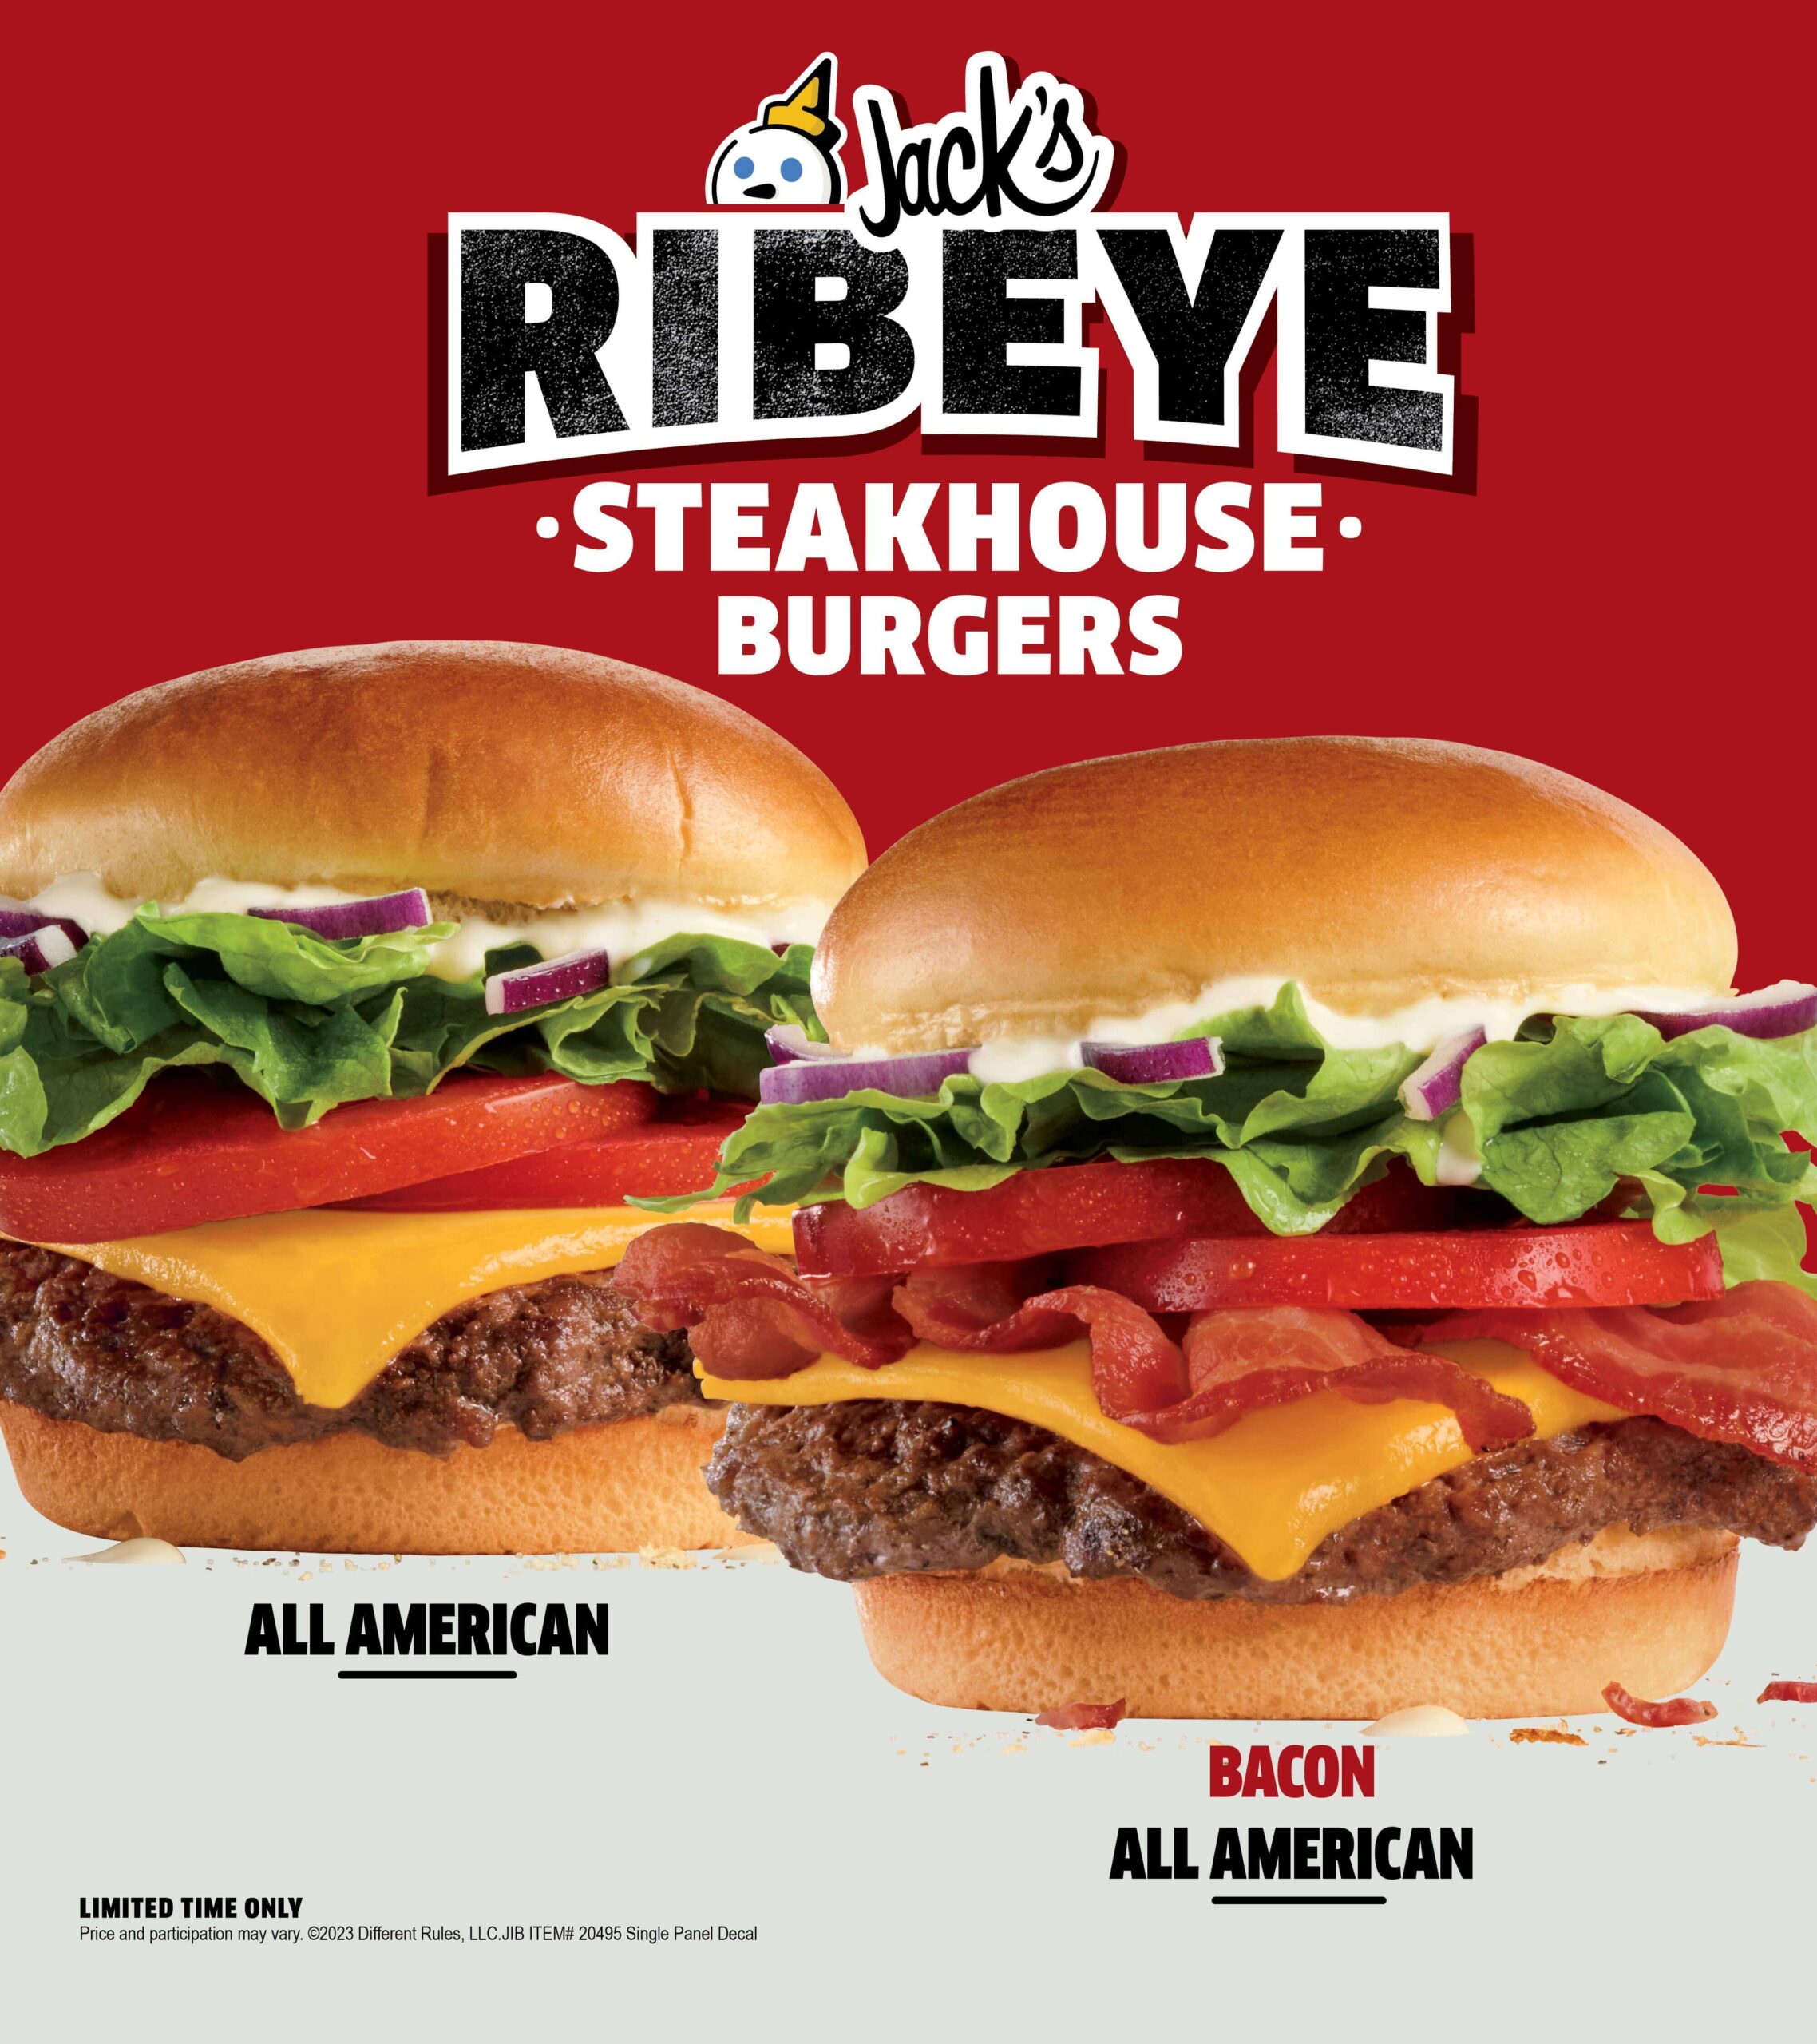 Ribeye Steakhouse Burgers